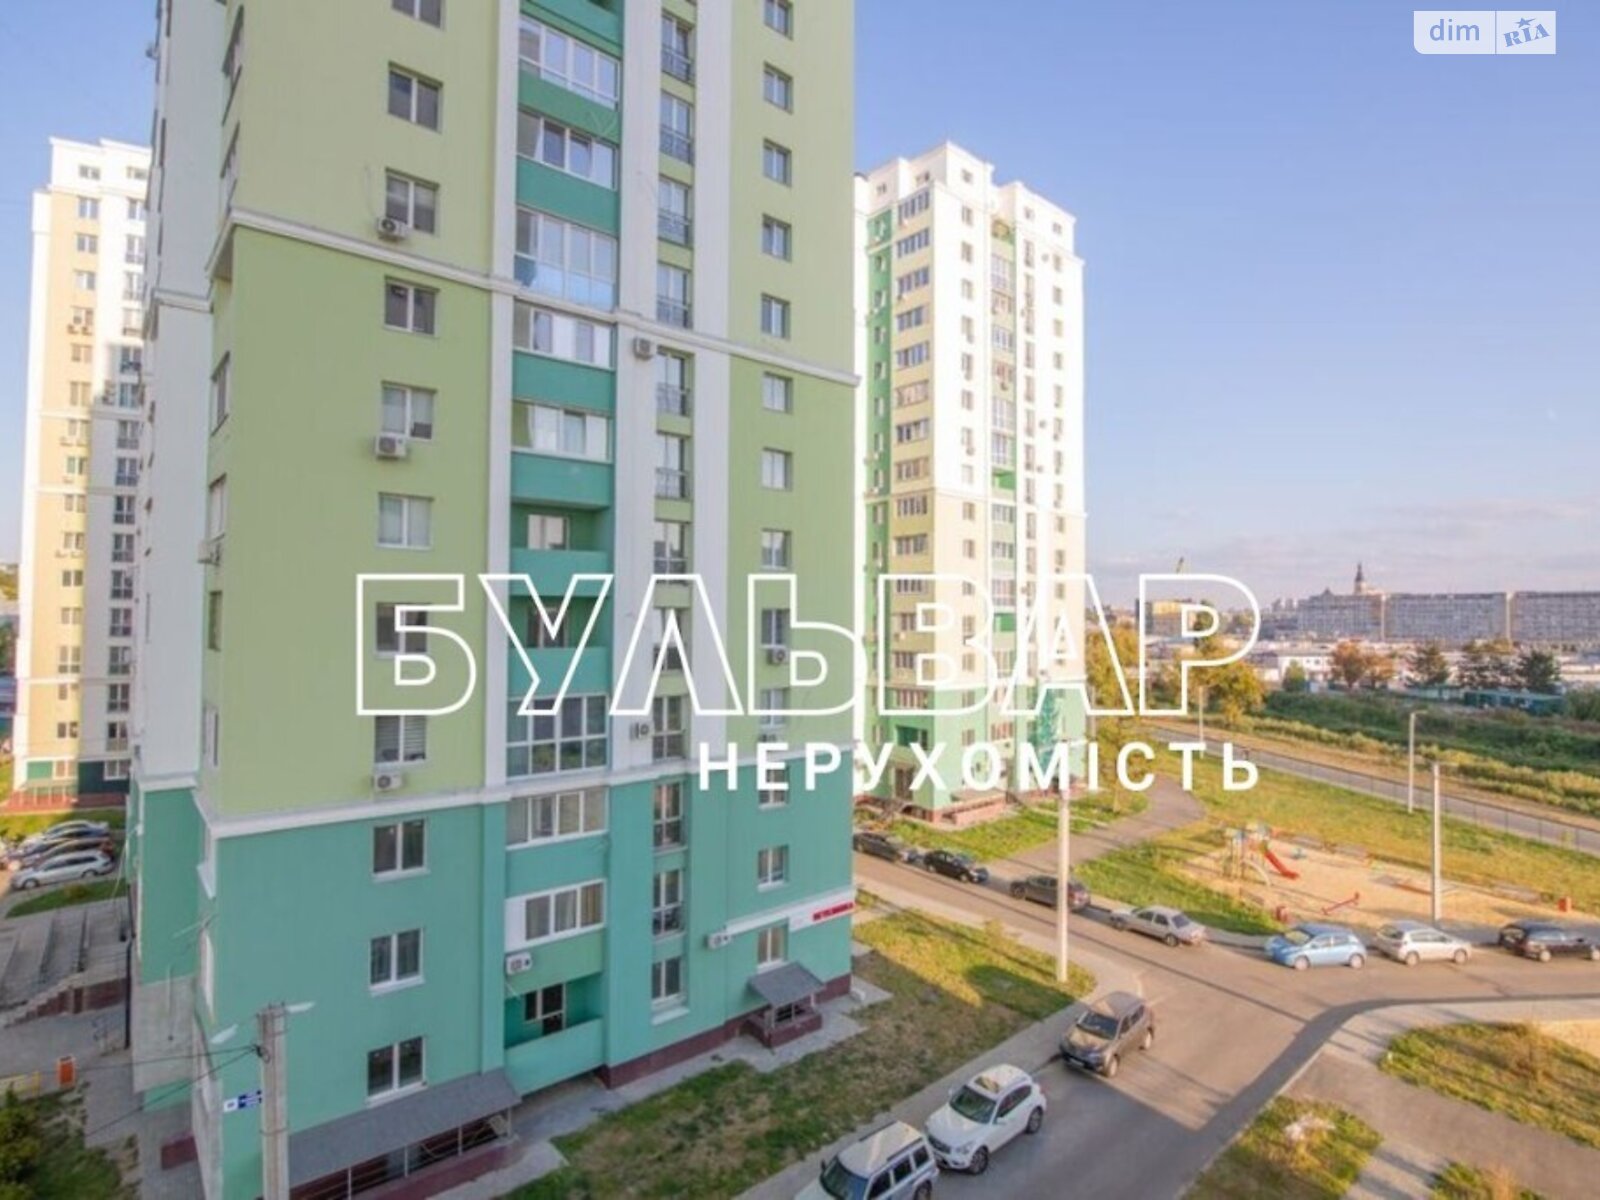 Продажа однокомнатной квартиры в Харькове, на ул. Рогатинская Левада 22, район Центр фото 1